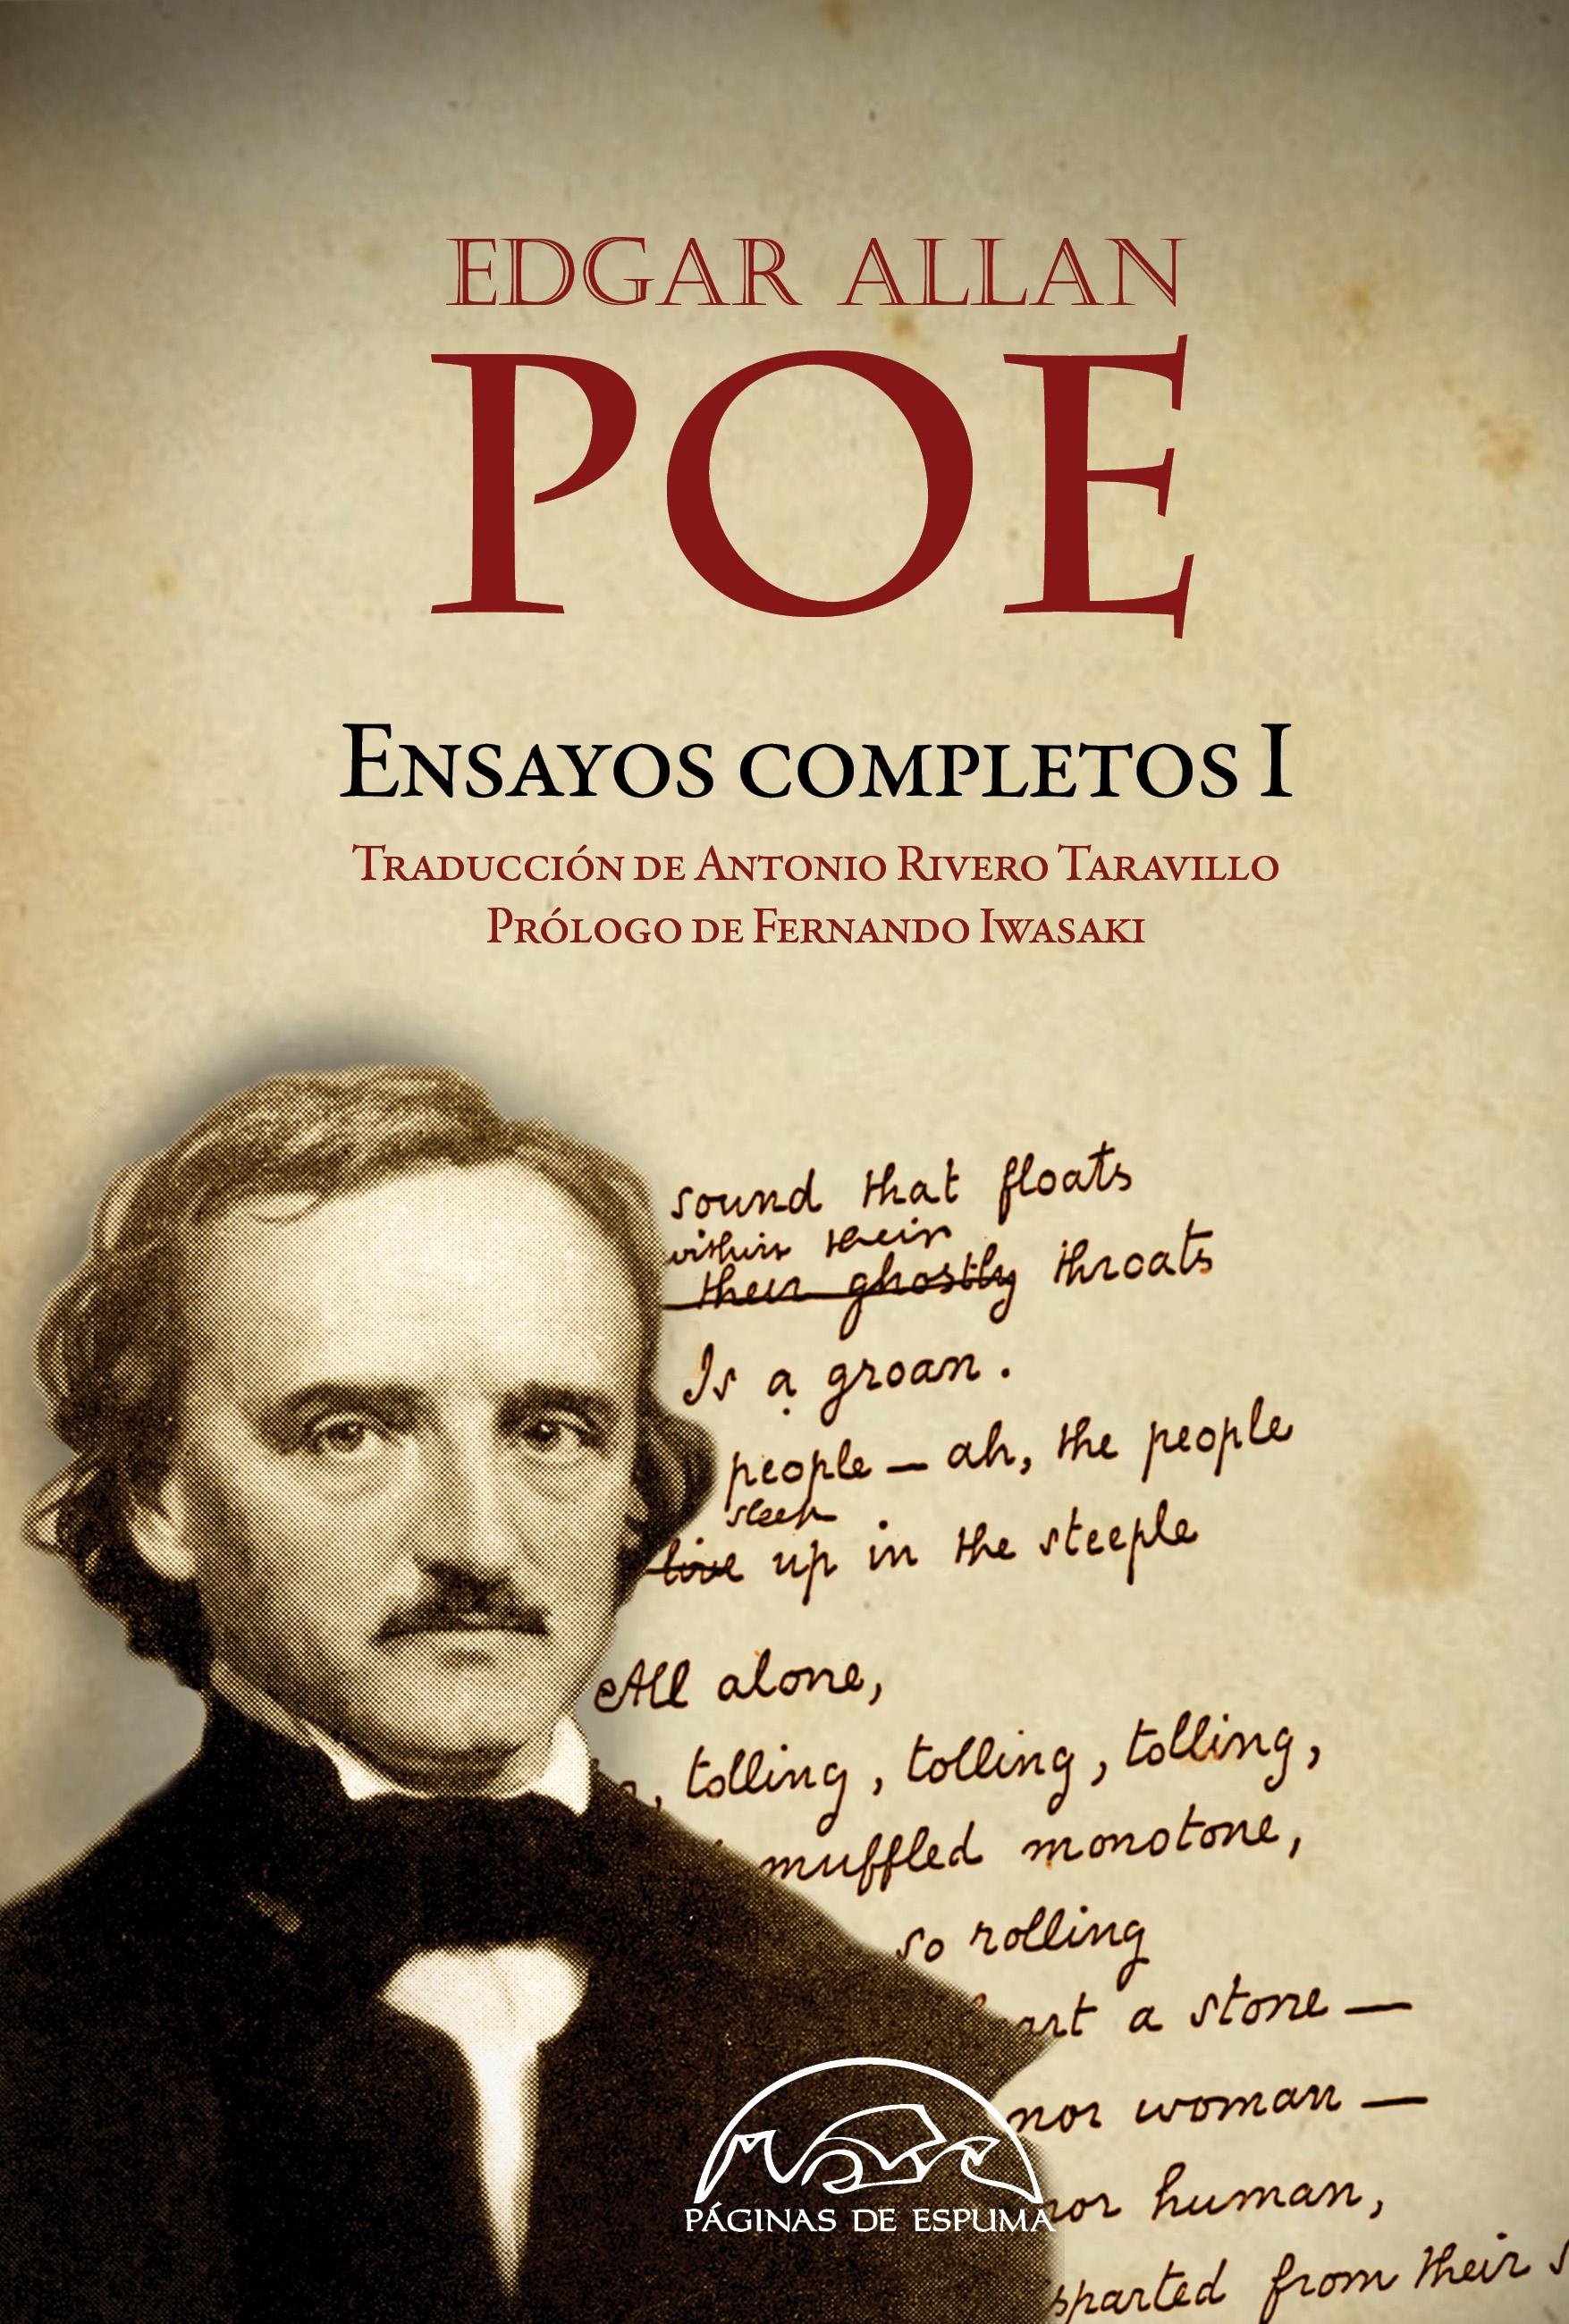 Ensayos completos - I "(Edgar Allan Poe)". 